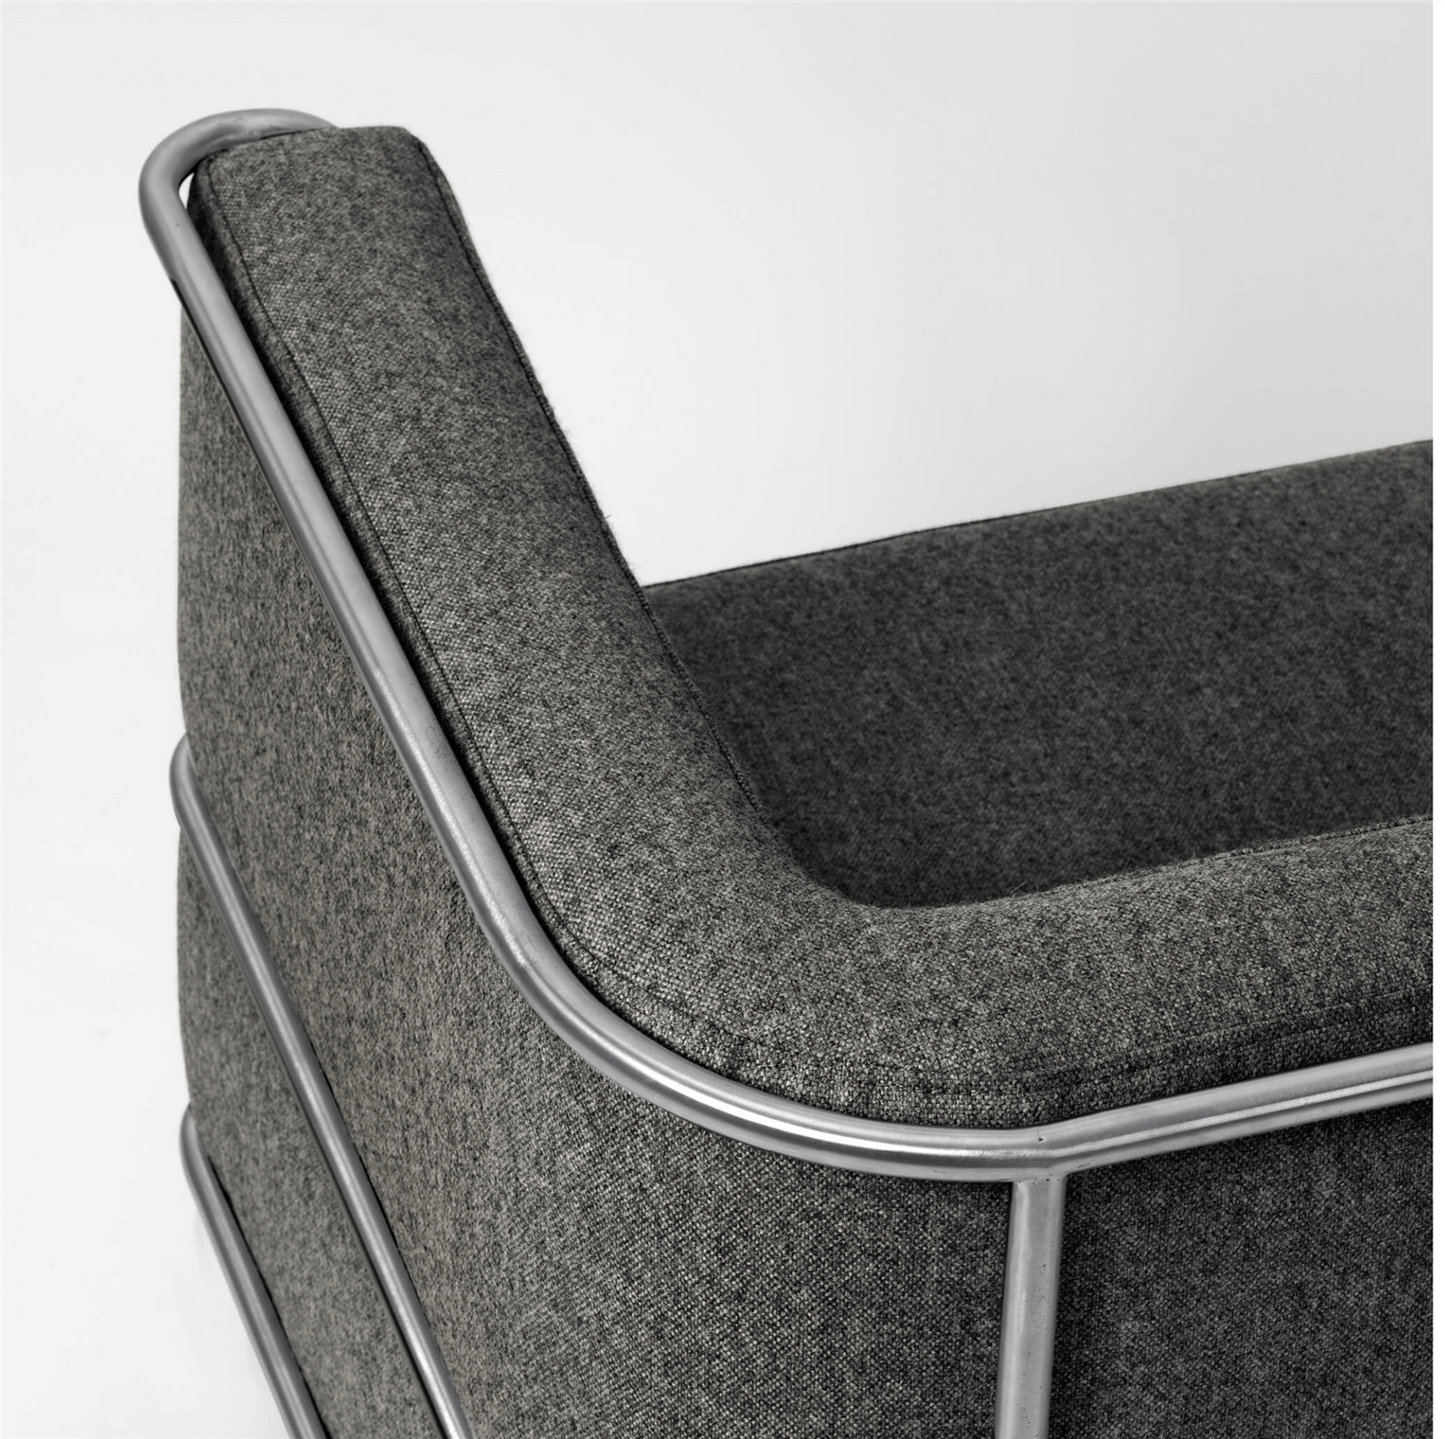 Modernist Sofa /Kristina Dam 3 -seter grey wool